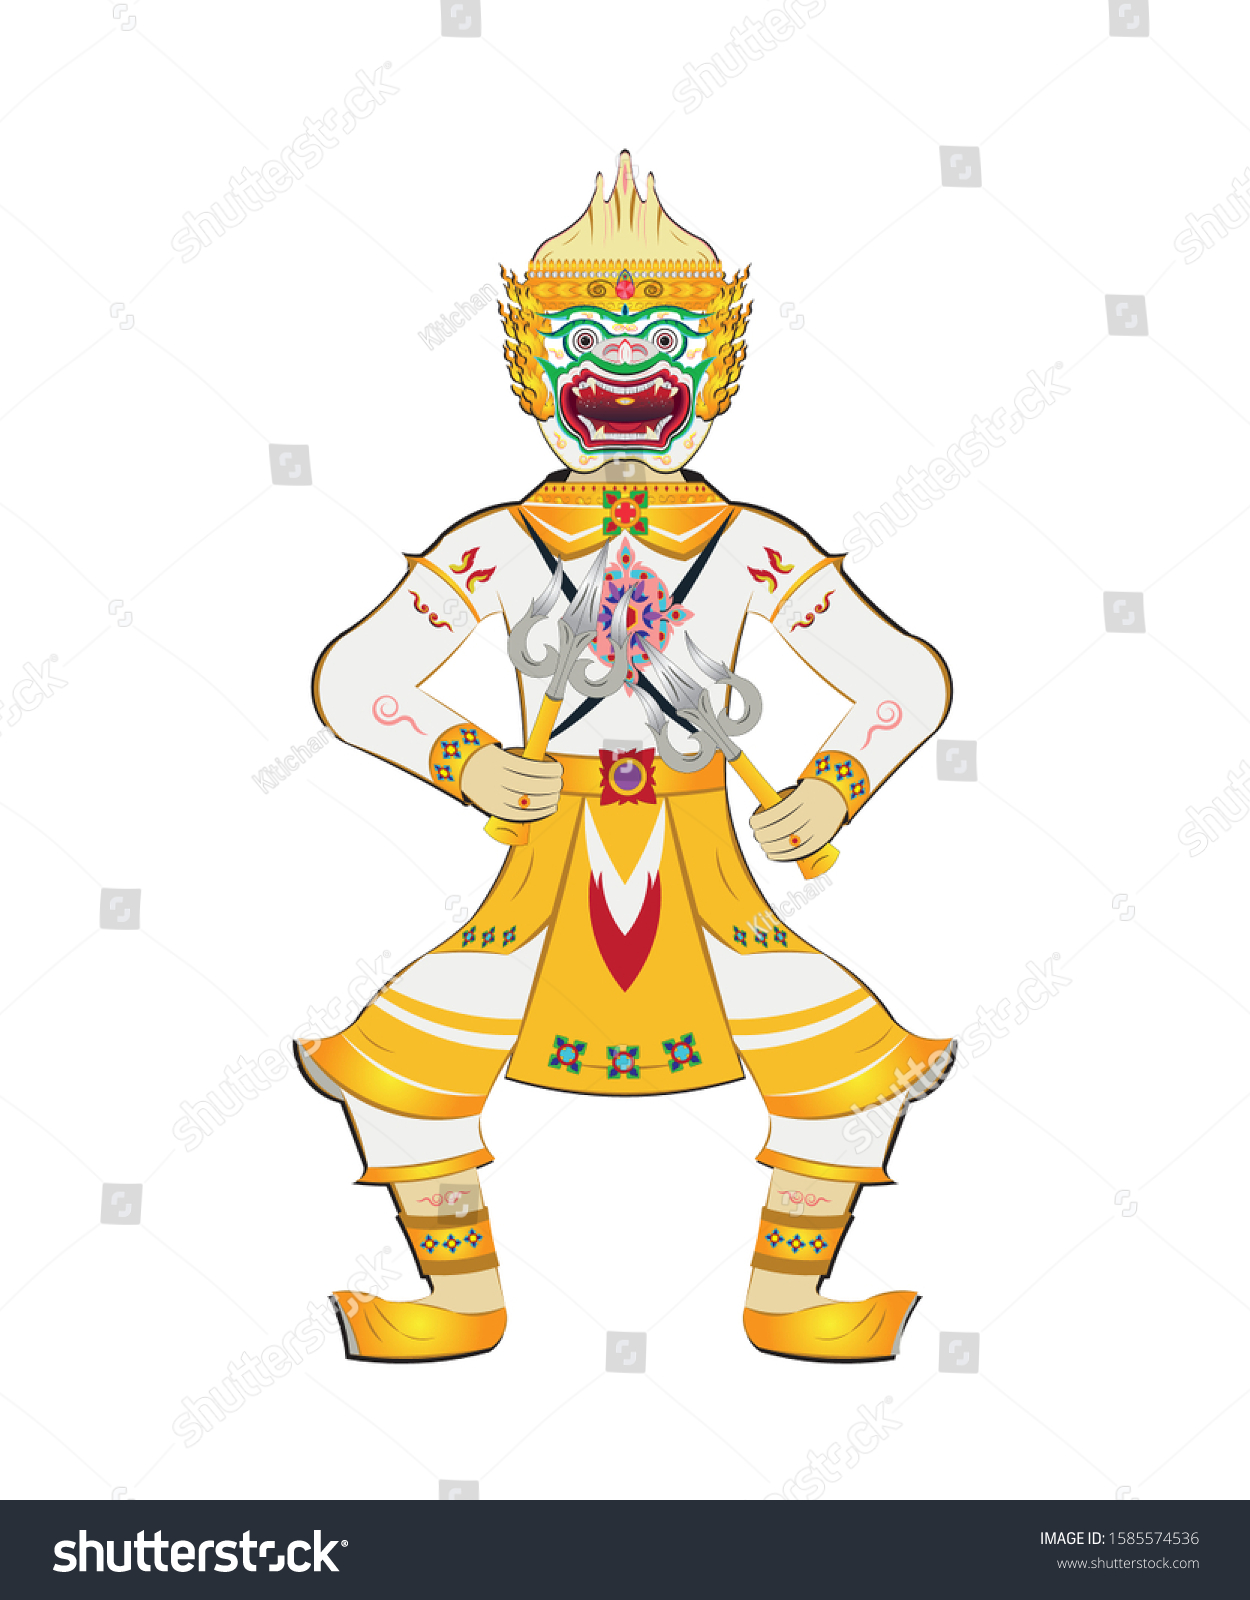 SVG of The Hanuman mask crown and dress in Ramakien or Ramayana Mahabharata literature drawing in funny cartoon vector svg